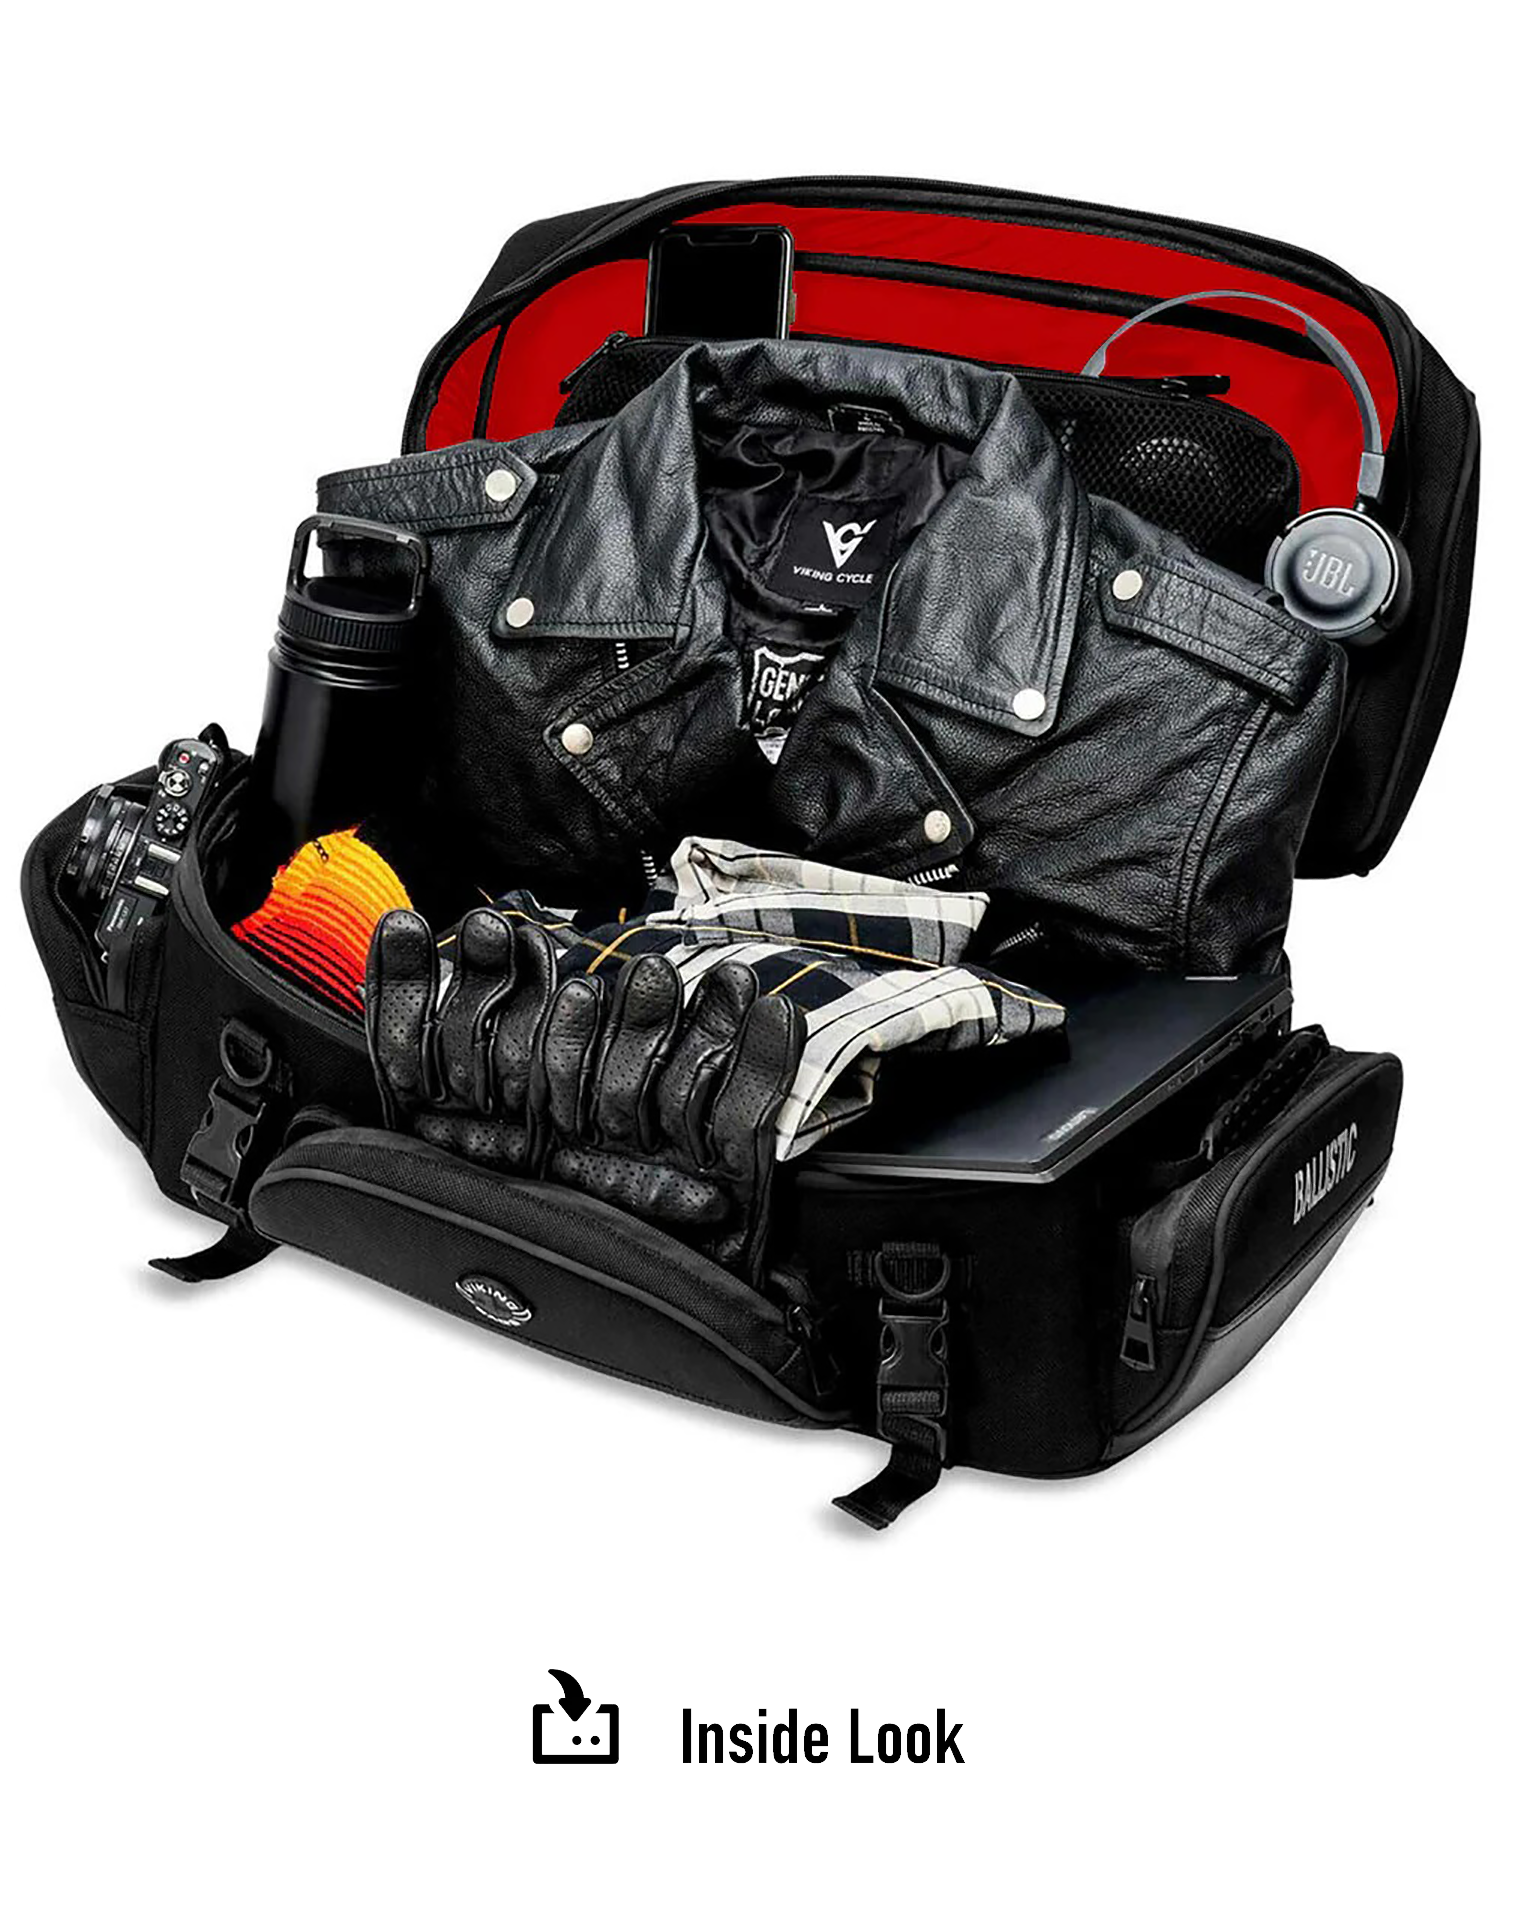 43L - Voyage Elite XL Hyosung Motorcycle Sissy Bar Bag